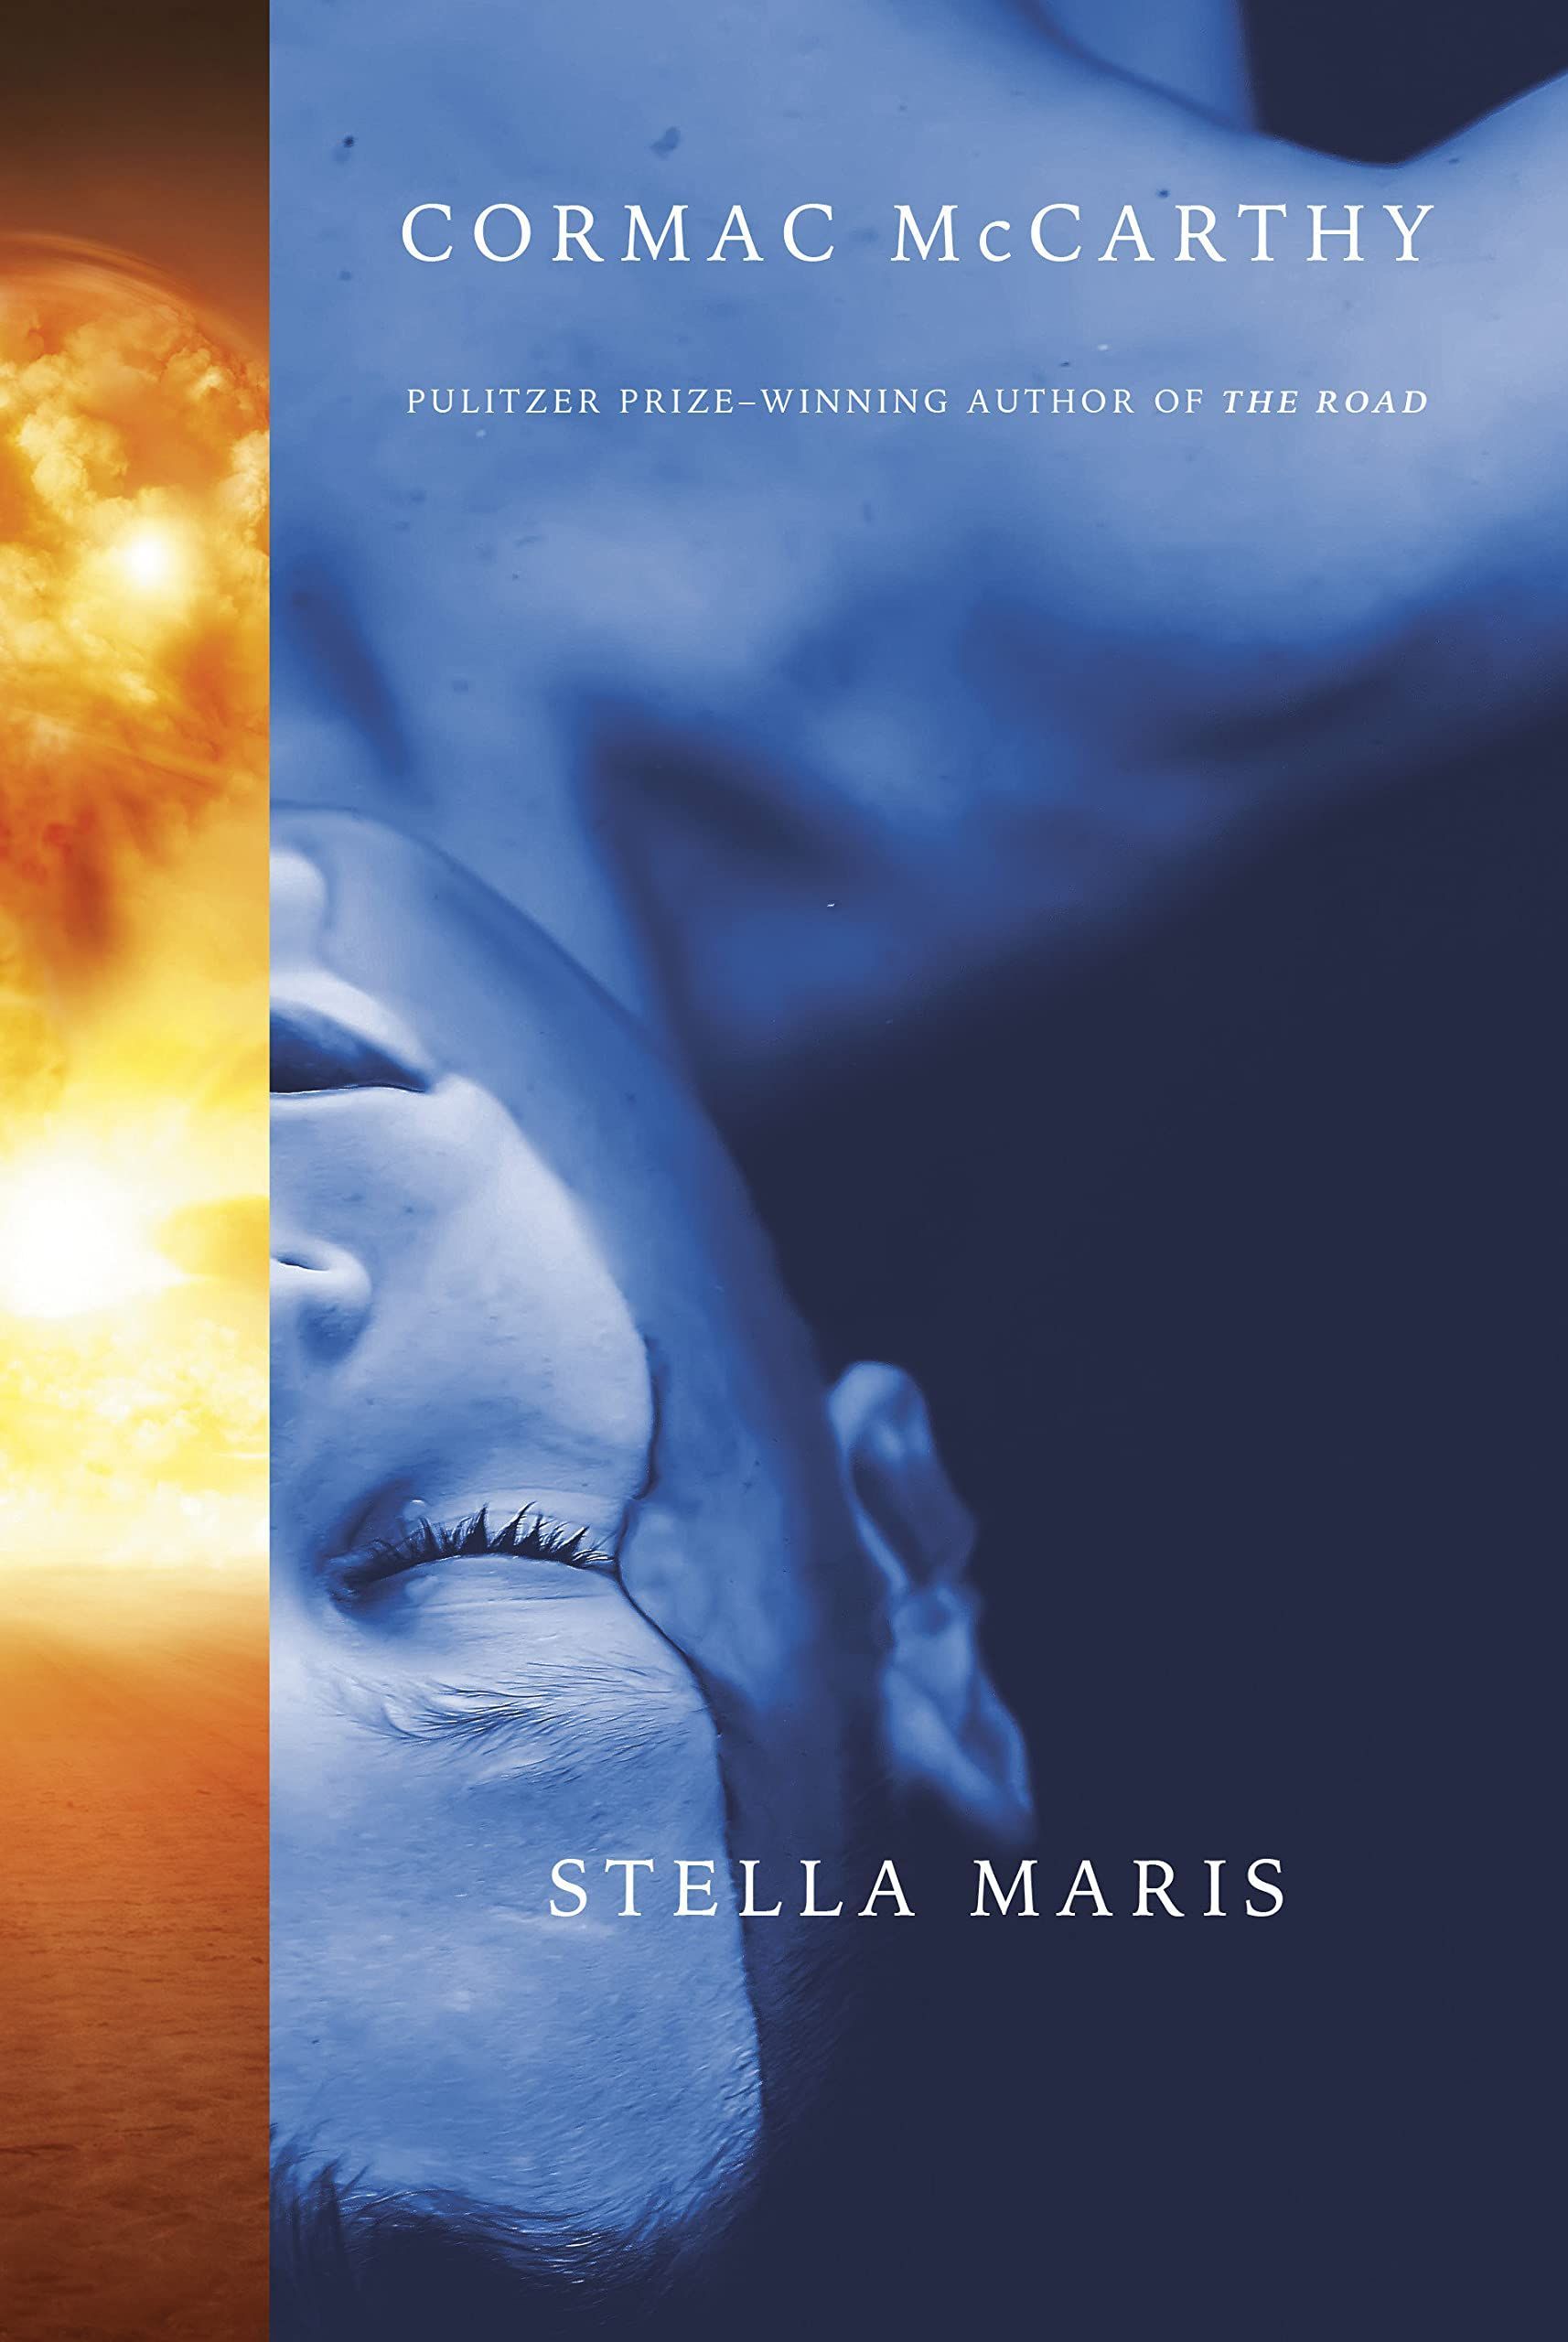 Mathematical Tragedy: On Cormac McCarthy’s “Stella Maris”